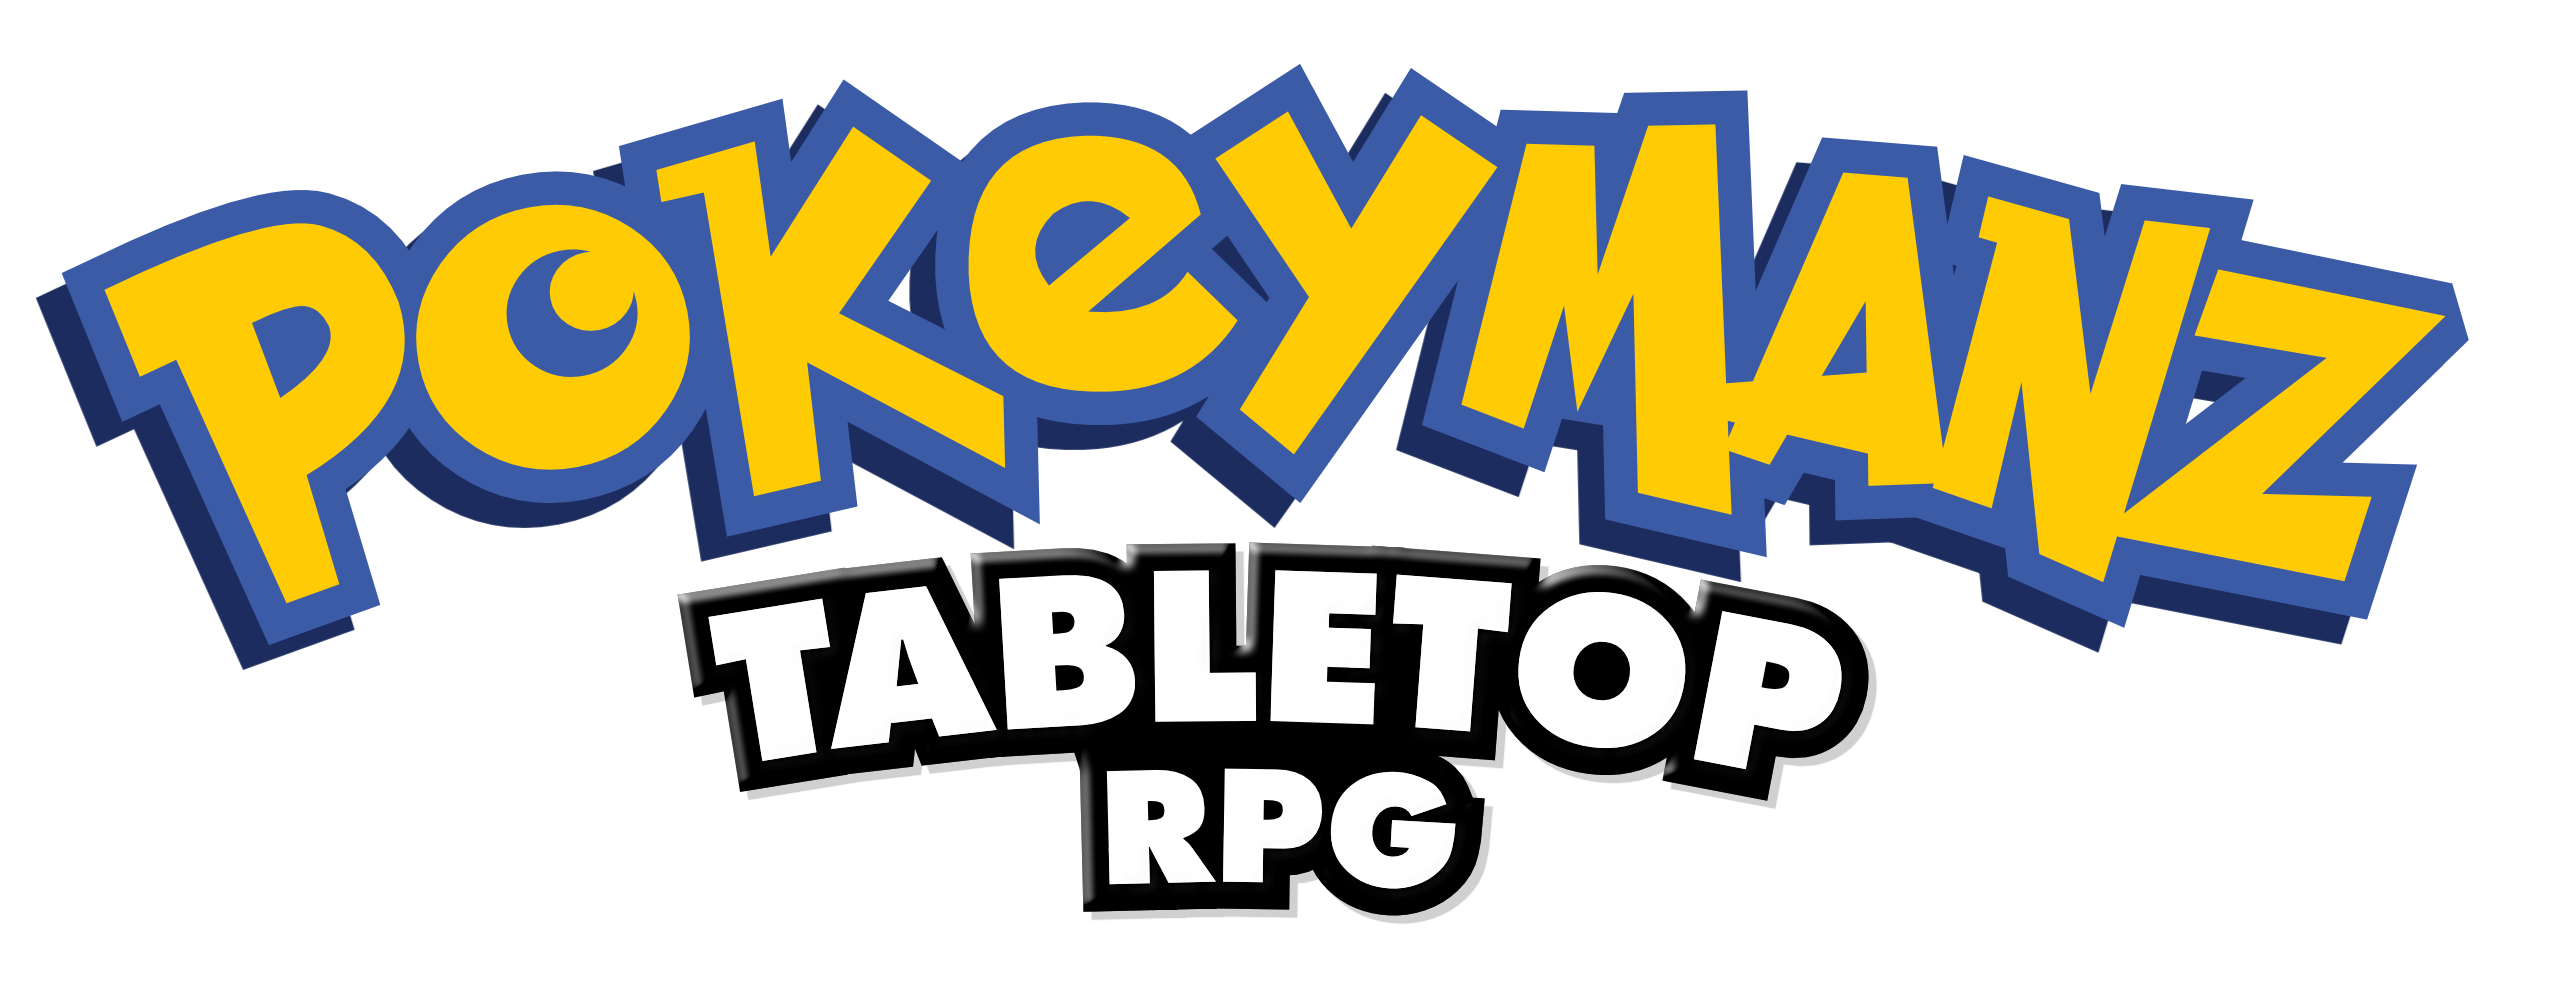 Pokeymanz Tabletop RPG